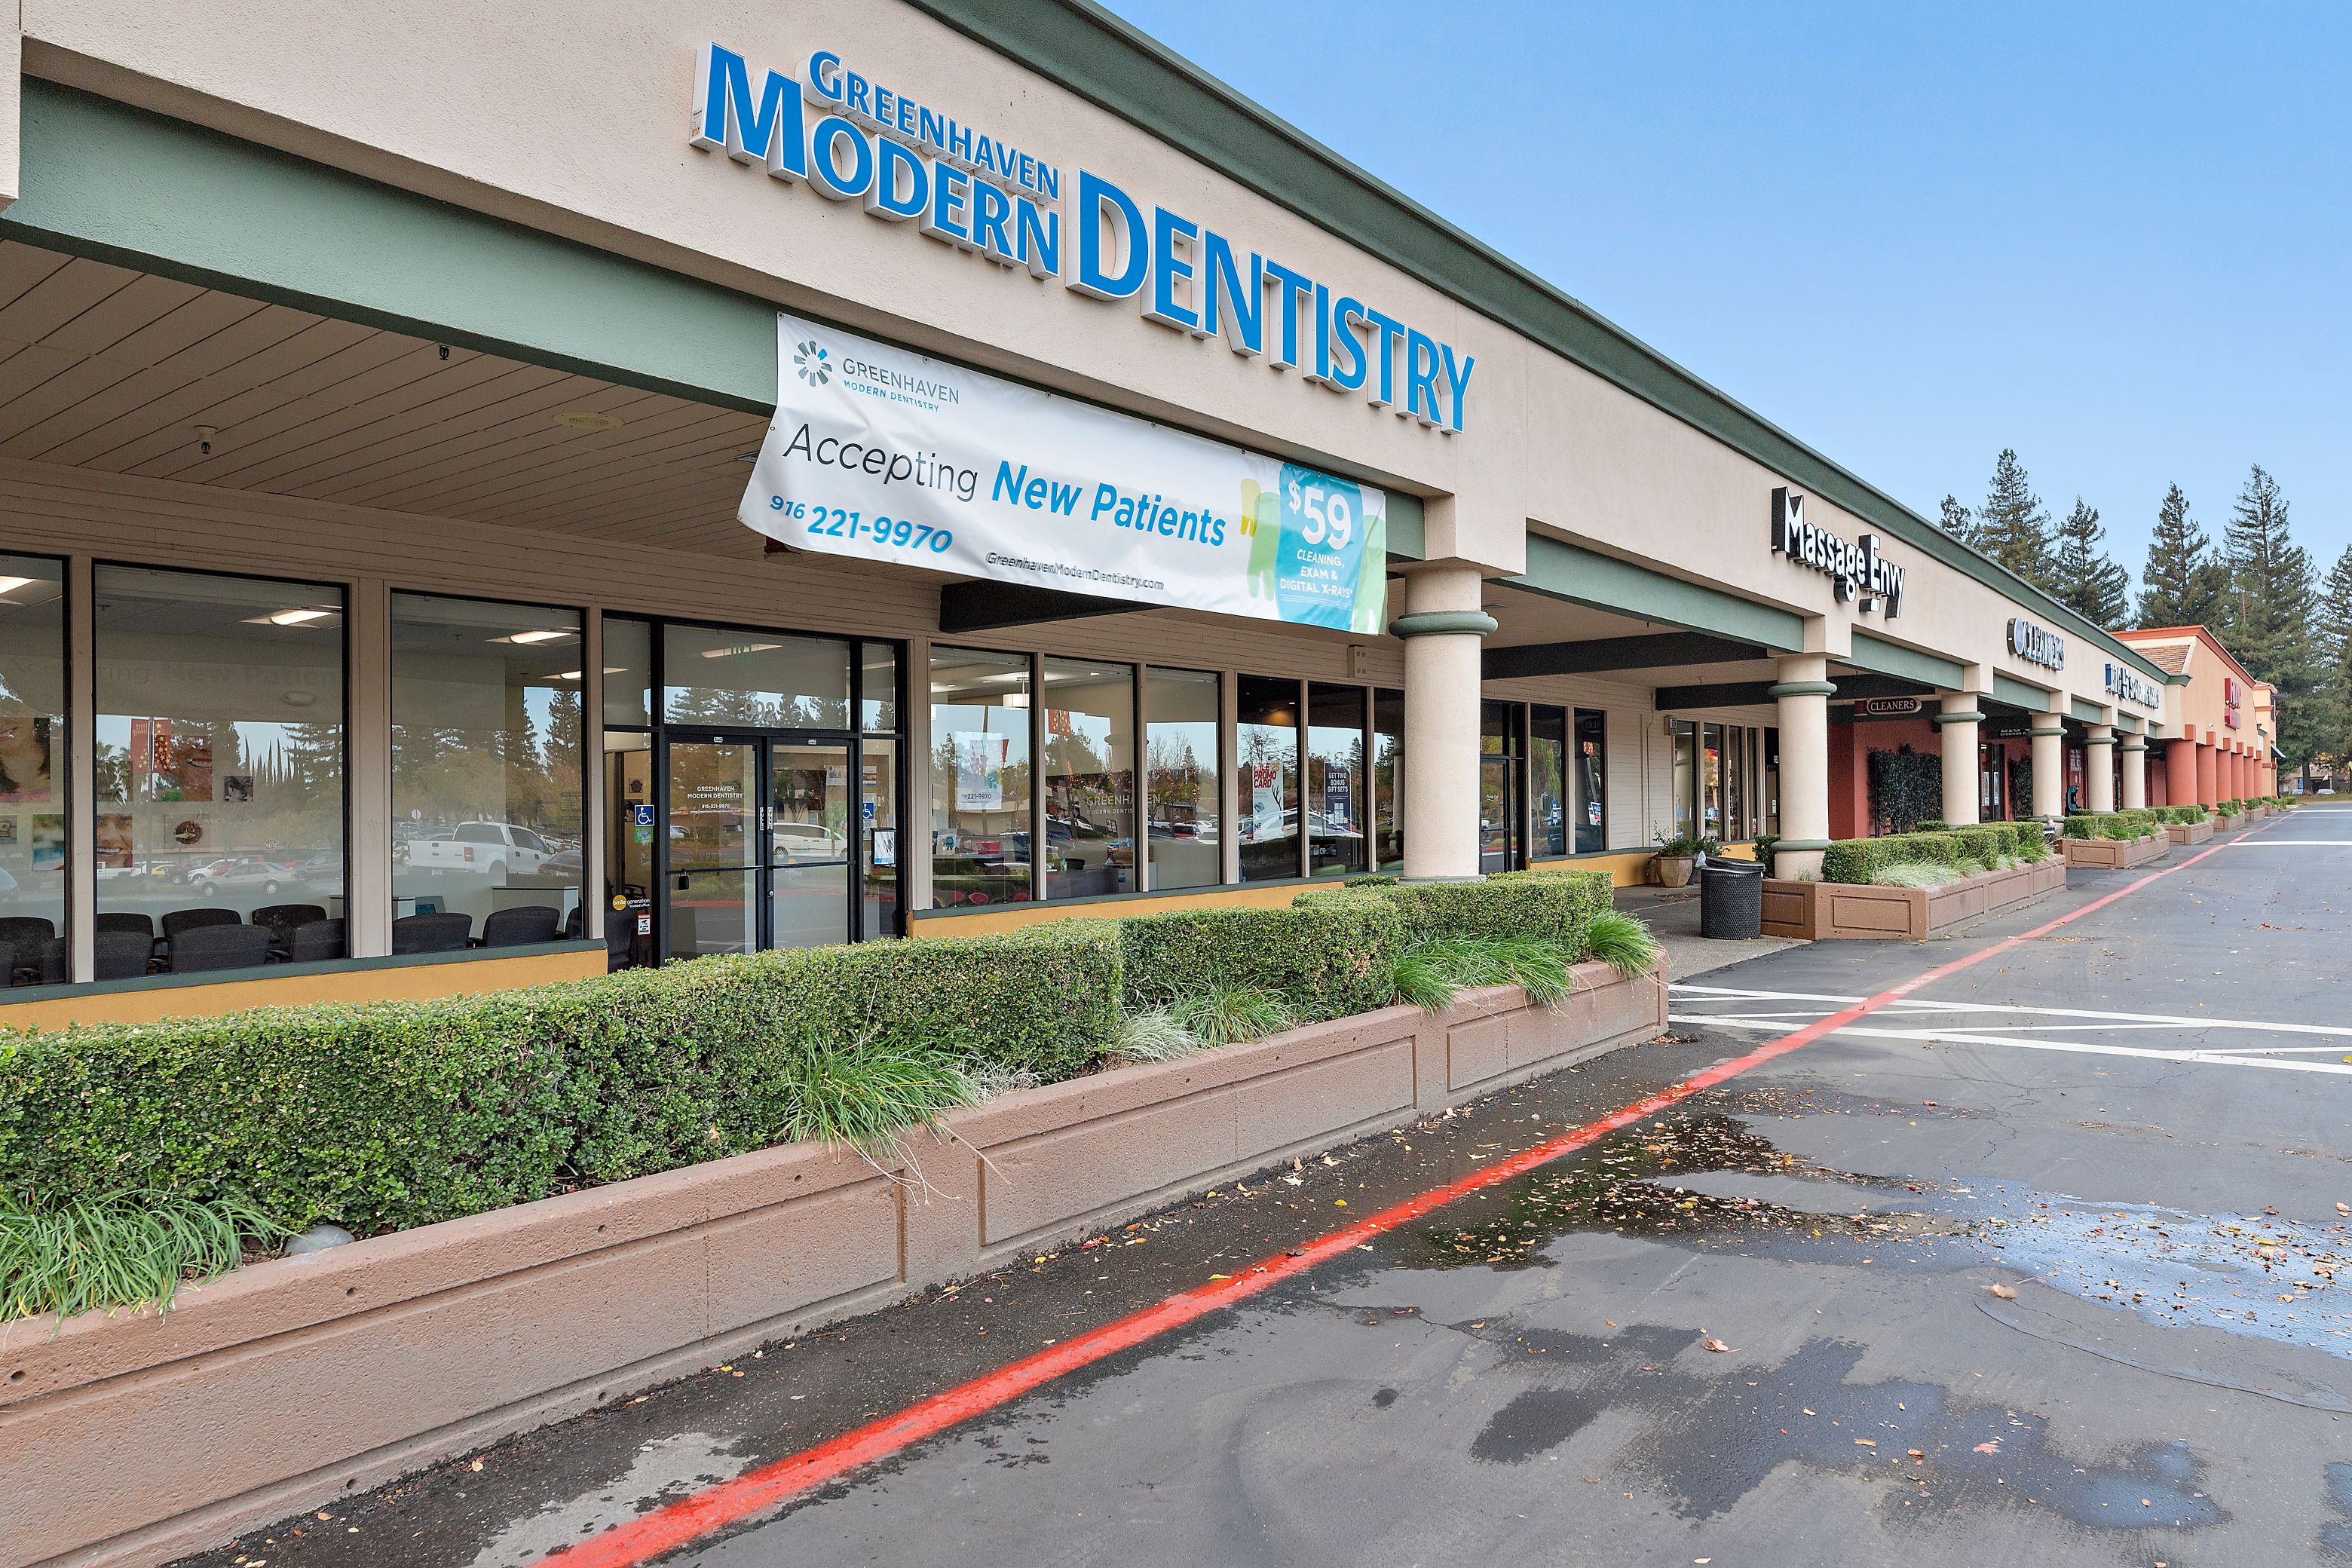 Greenhaven Modern Dentistry Sacramento (916)221-9970